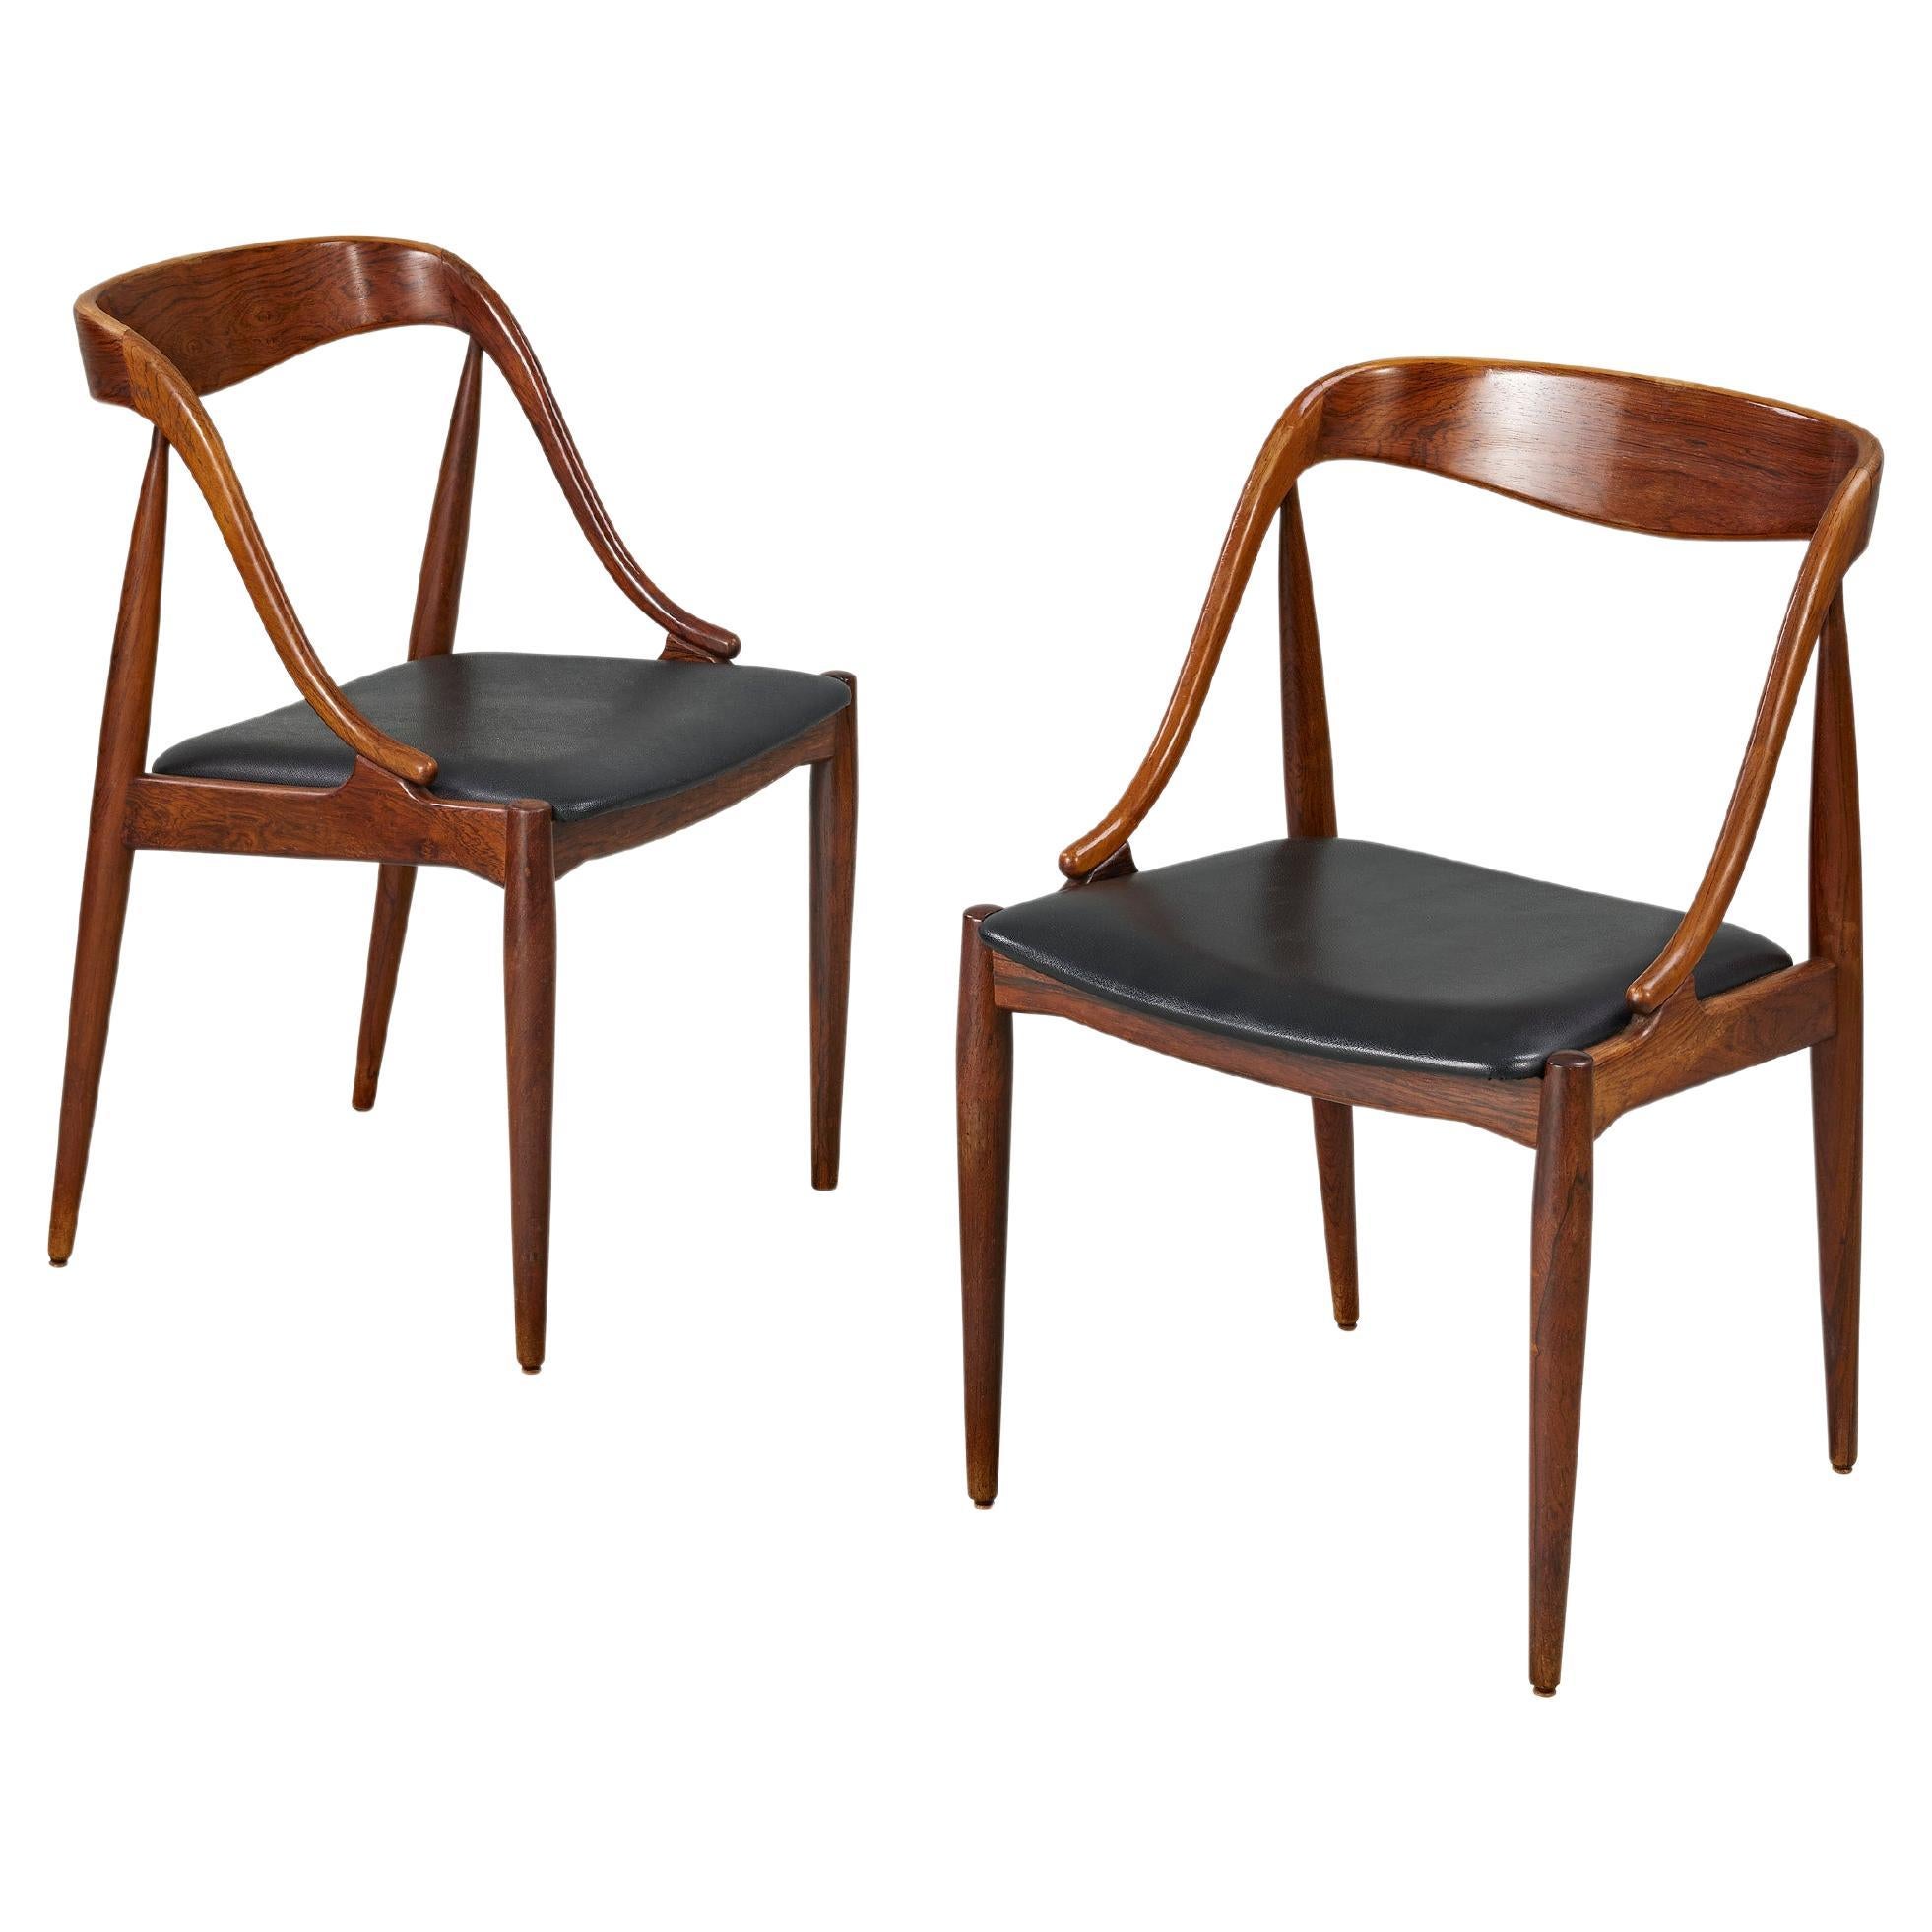 A pair of 1960s Teak Johannes Andersen Dining Chairs for Uldum Denmark